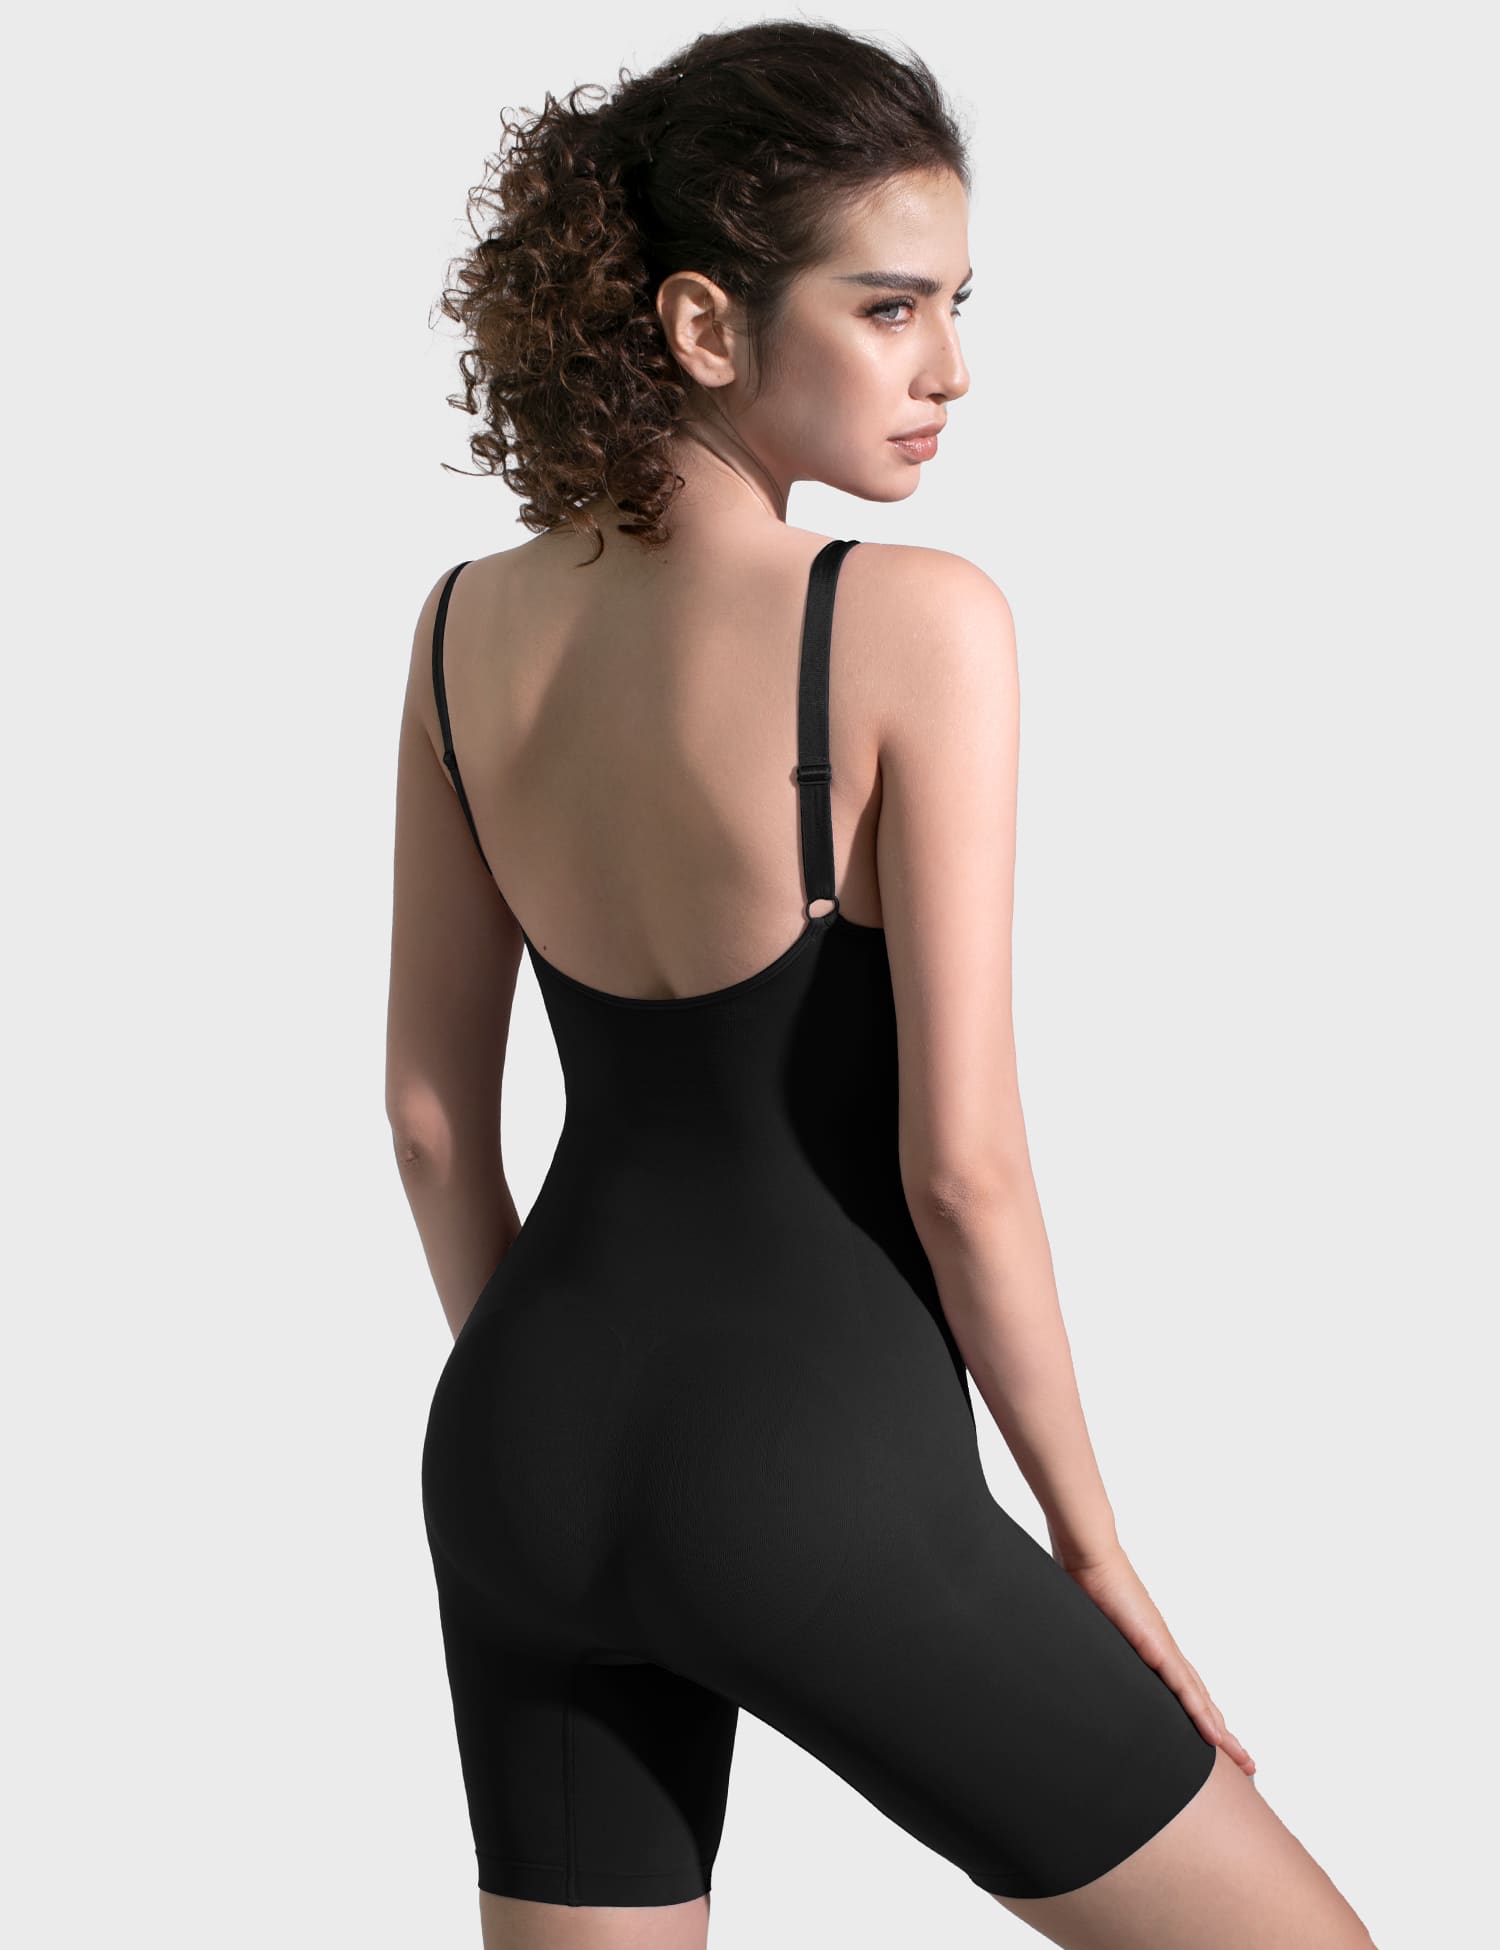  Customer reviews: PUMIEY Shapewear Bodysuit for Women Tummy  Control, Jet Black, Large-X-Large